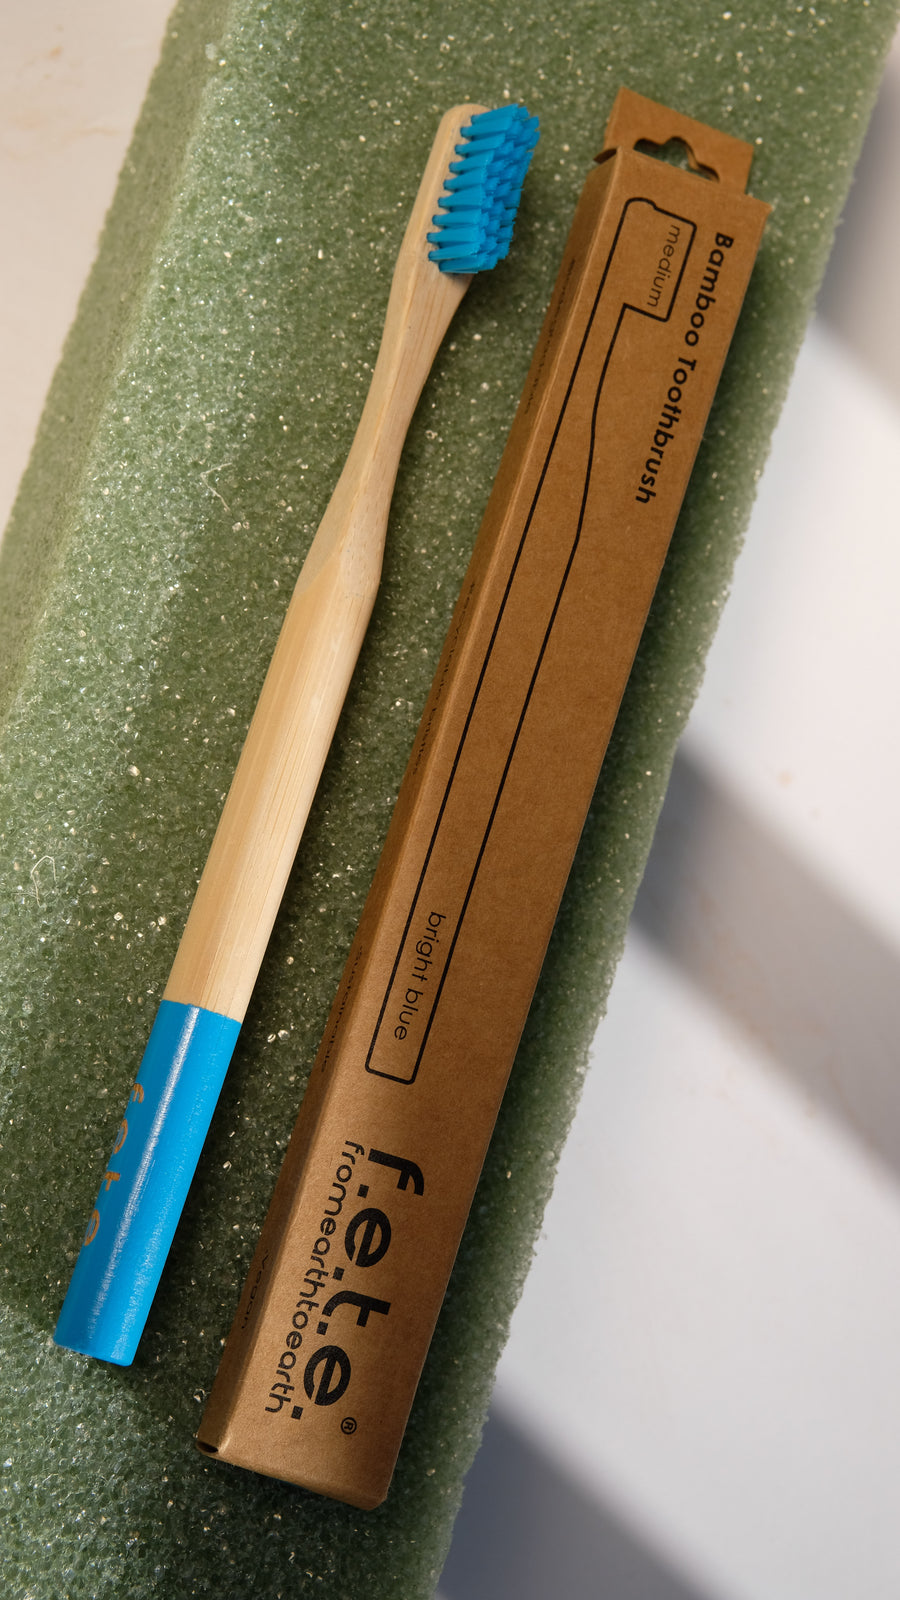 F.E.T.E. Medium Bamboo Toothbrush in Bright Blue